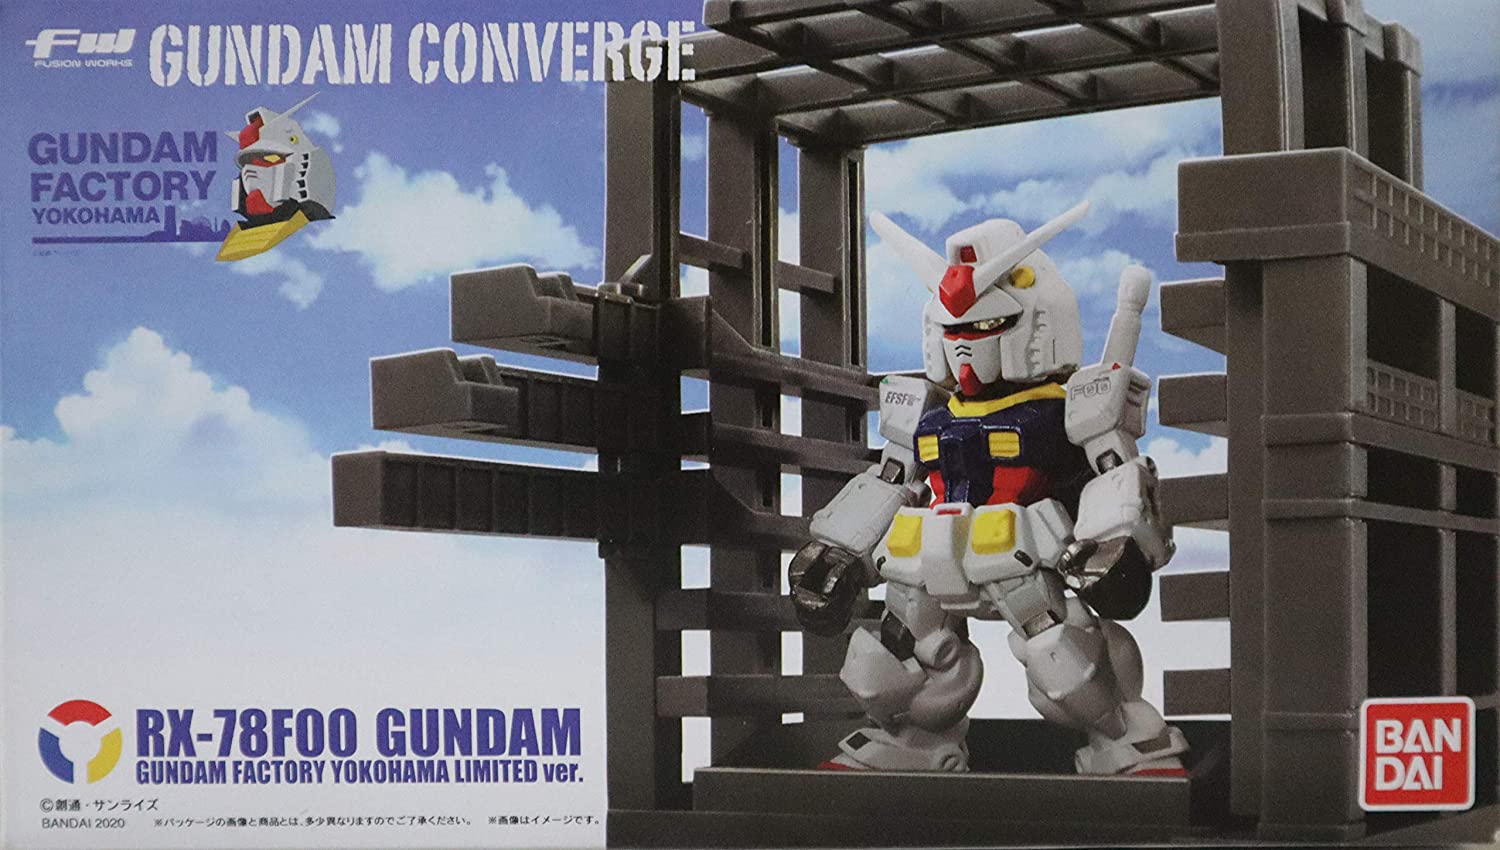 fw gundam converge rx-78f00 gundam [gundam factory yokohama venue limited sale]